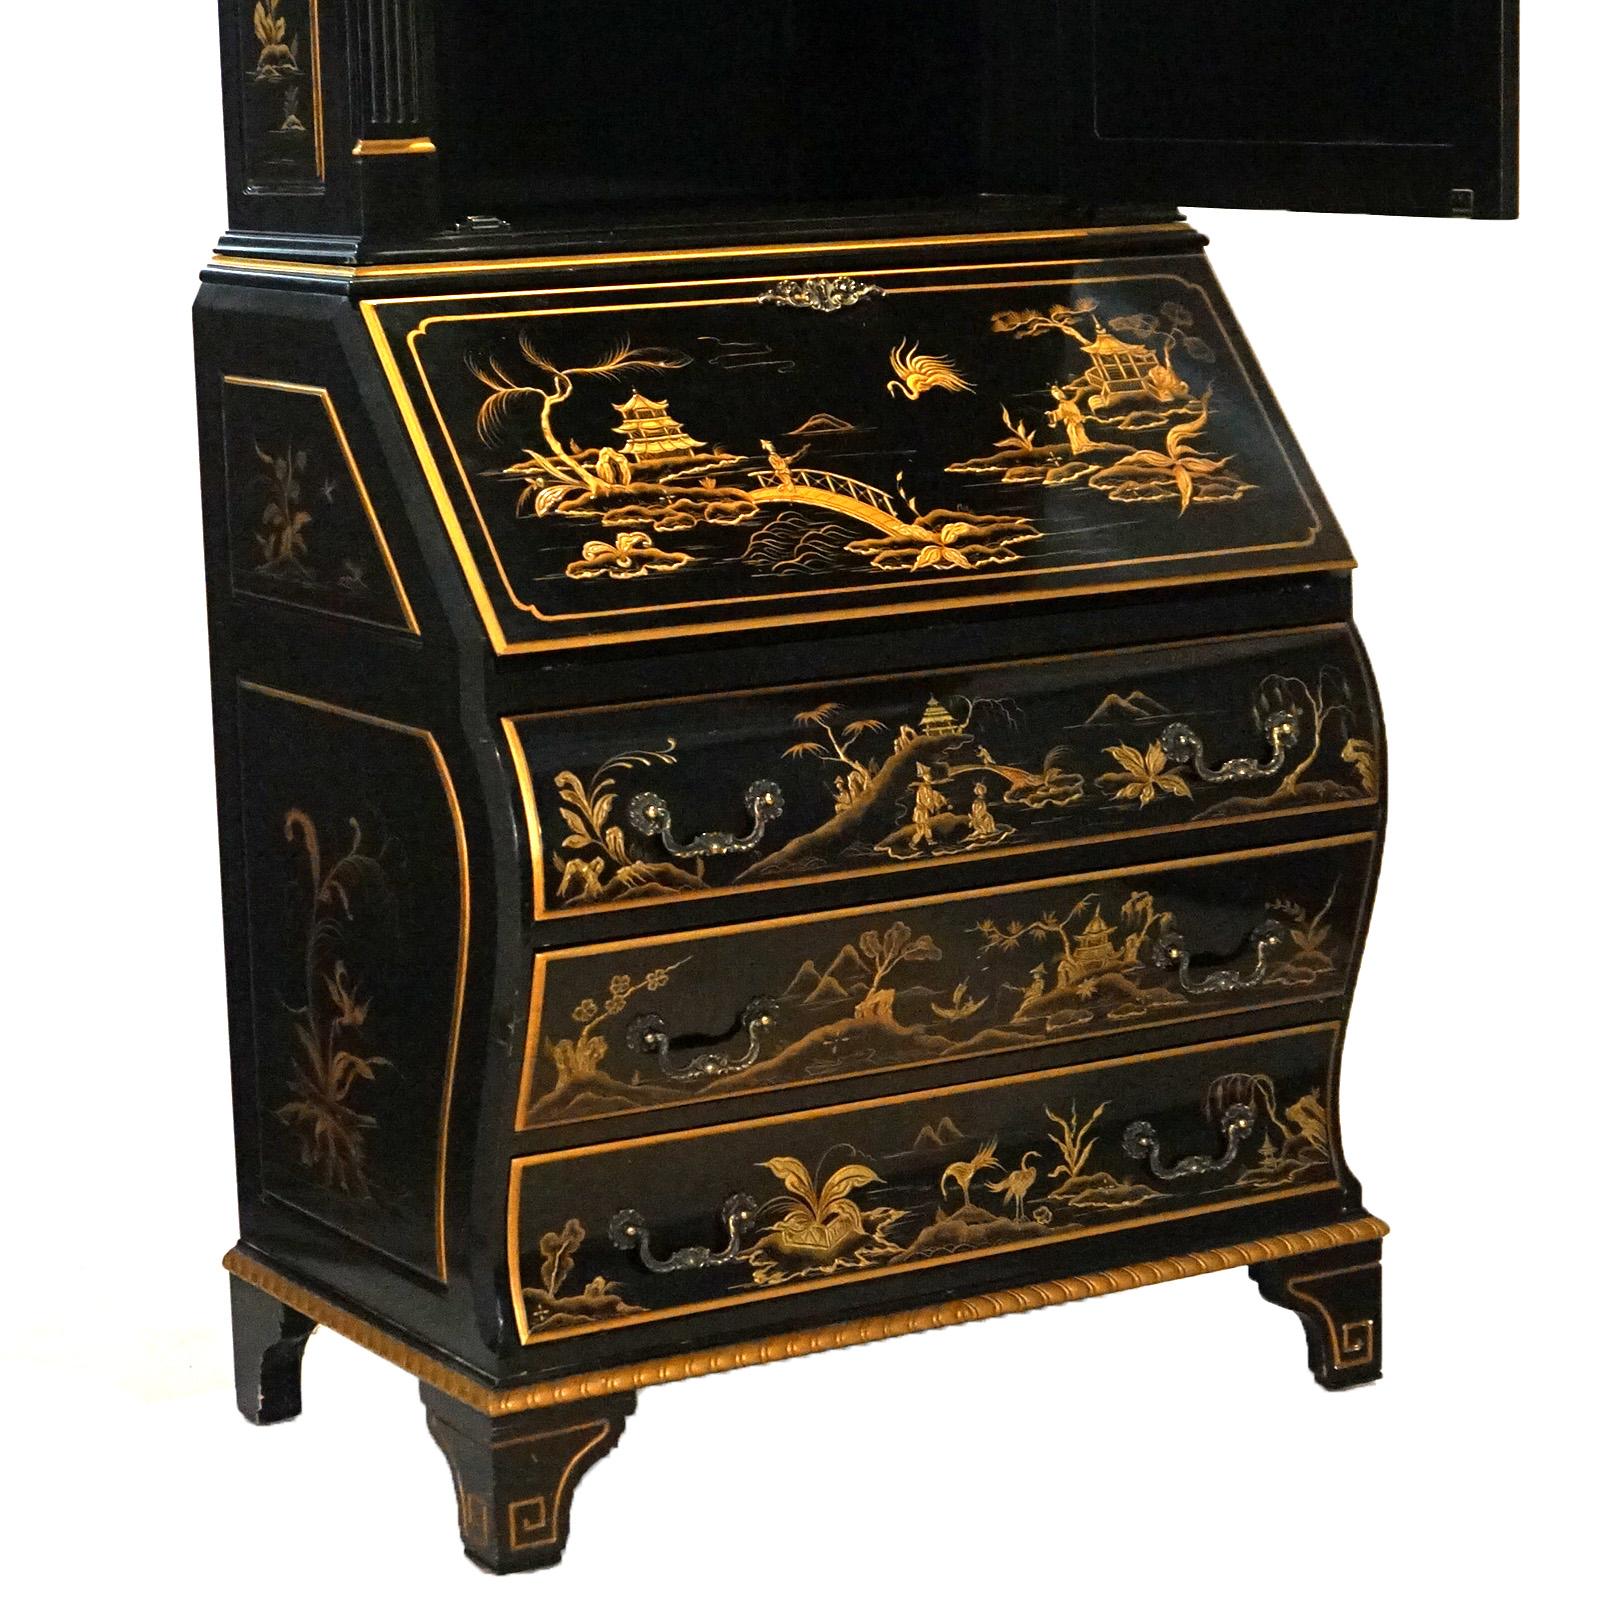 Karges Ebonized, Gilt & Chinoiserie Decorated Secretary Desk 20th Century For Sale 8